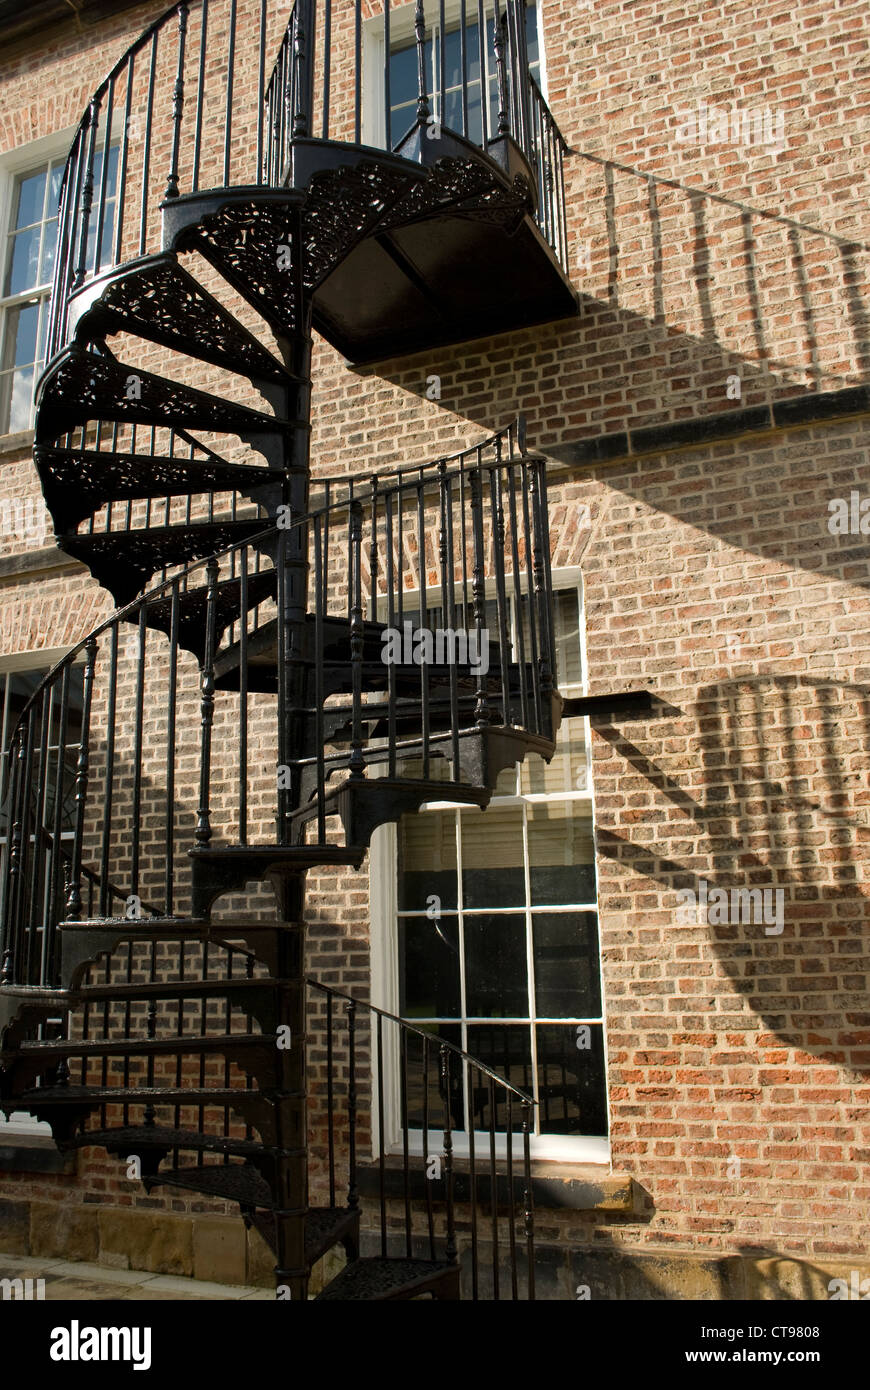 Spiral staircase fire escape Stock Photo - Alamy